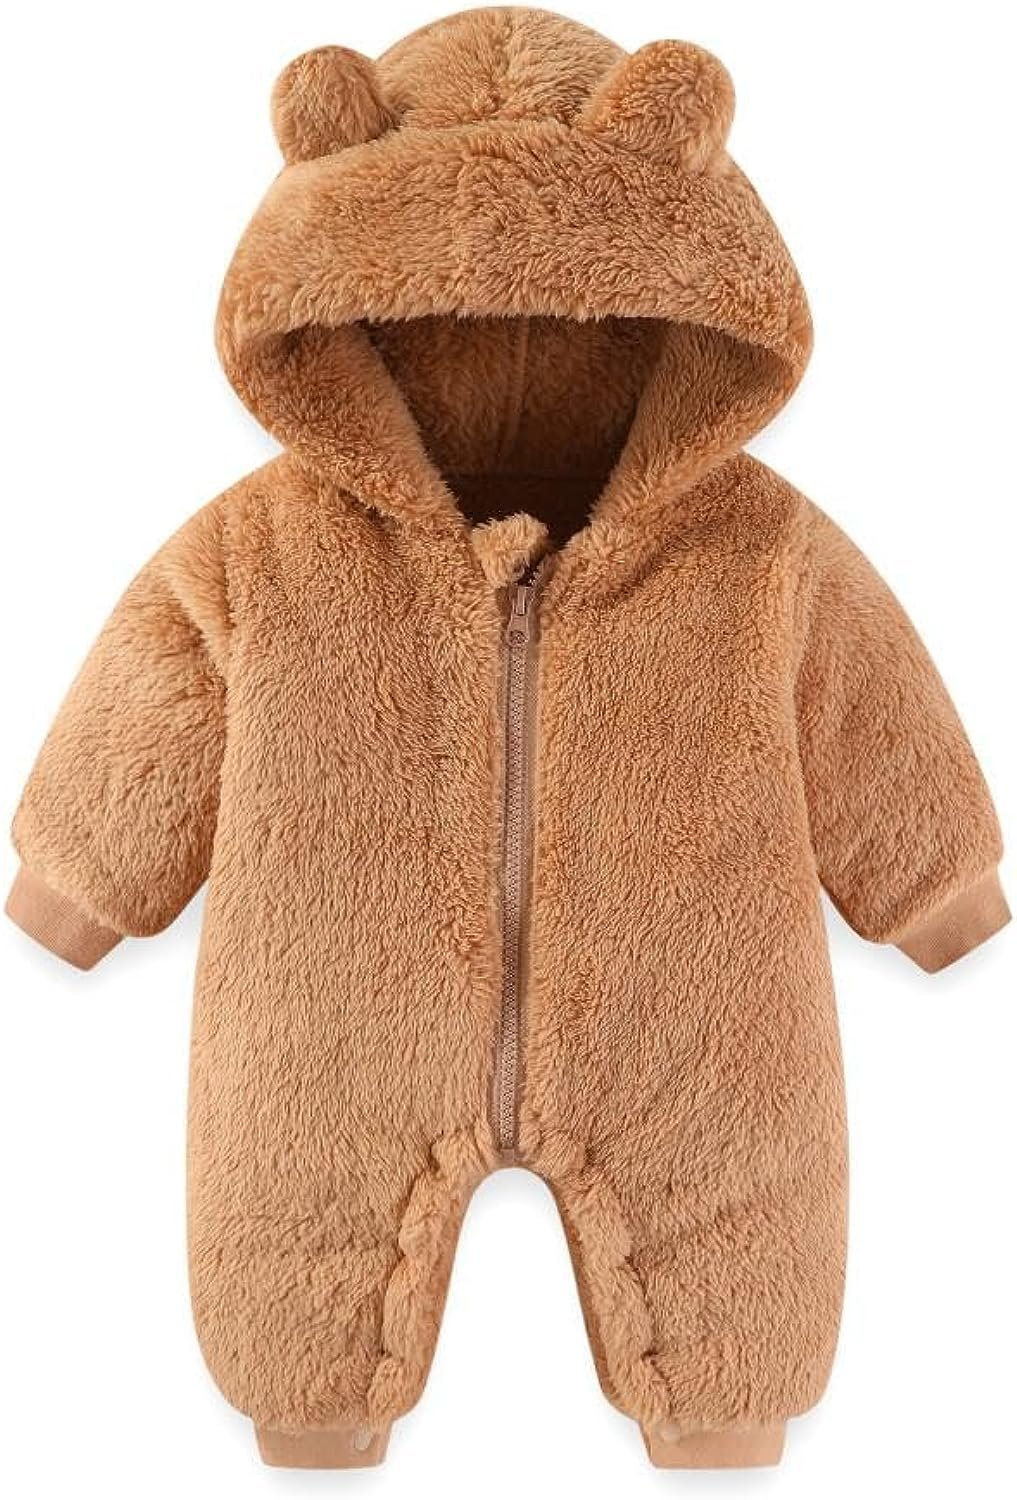 UVIPC Baby Newborn Bear Fleece Snowsuit Winter Coat Warm Hooded Jumpsuit for Baby boy girl